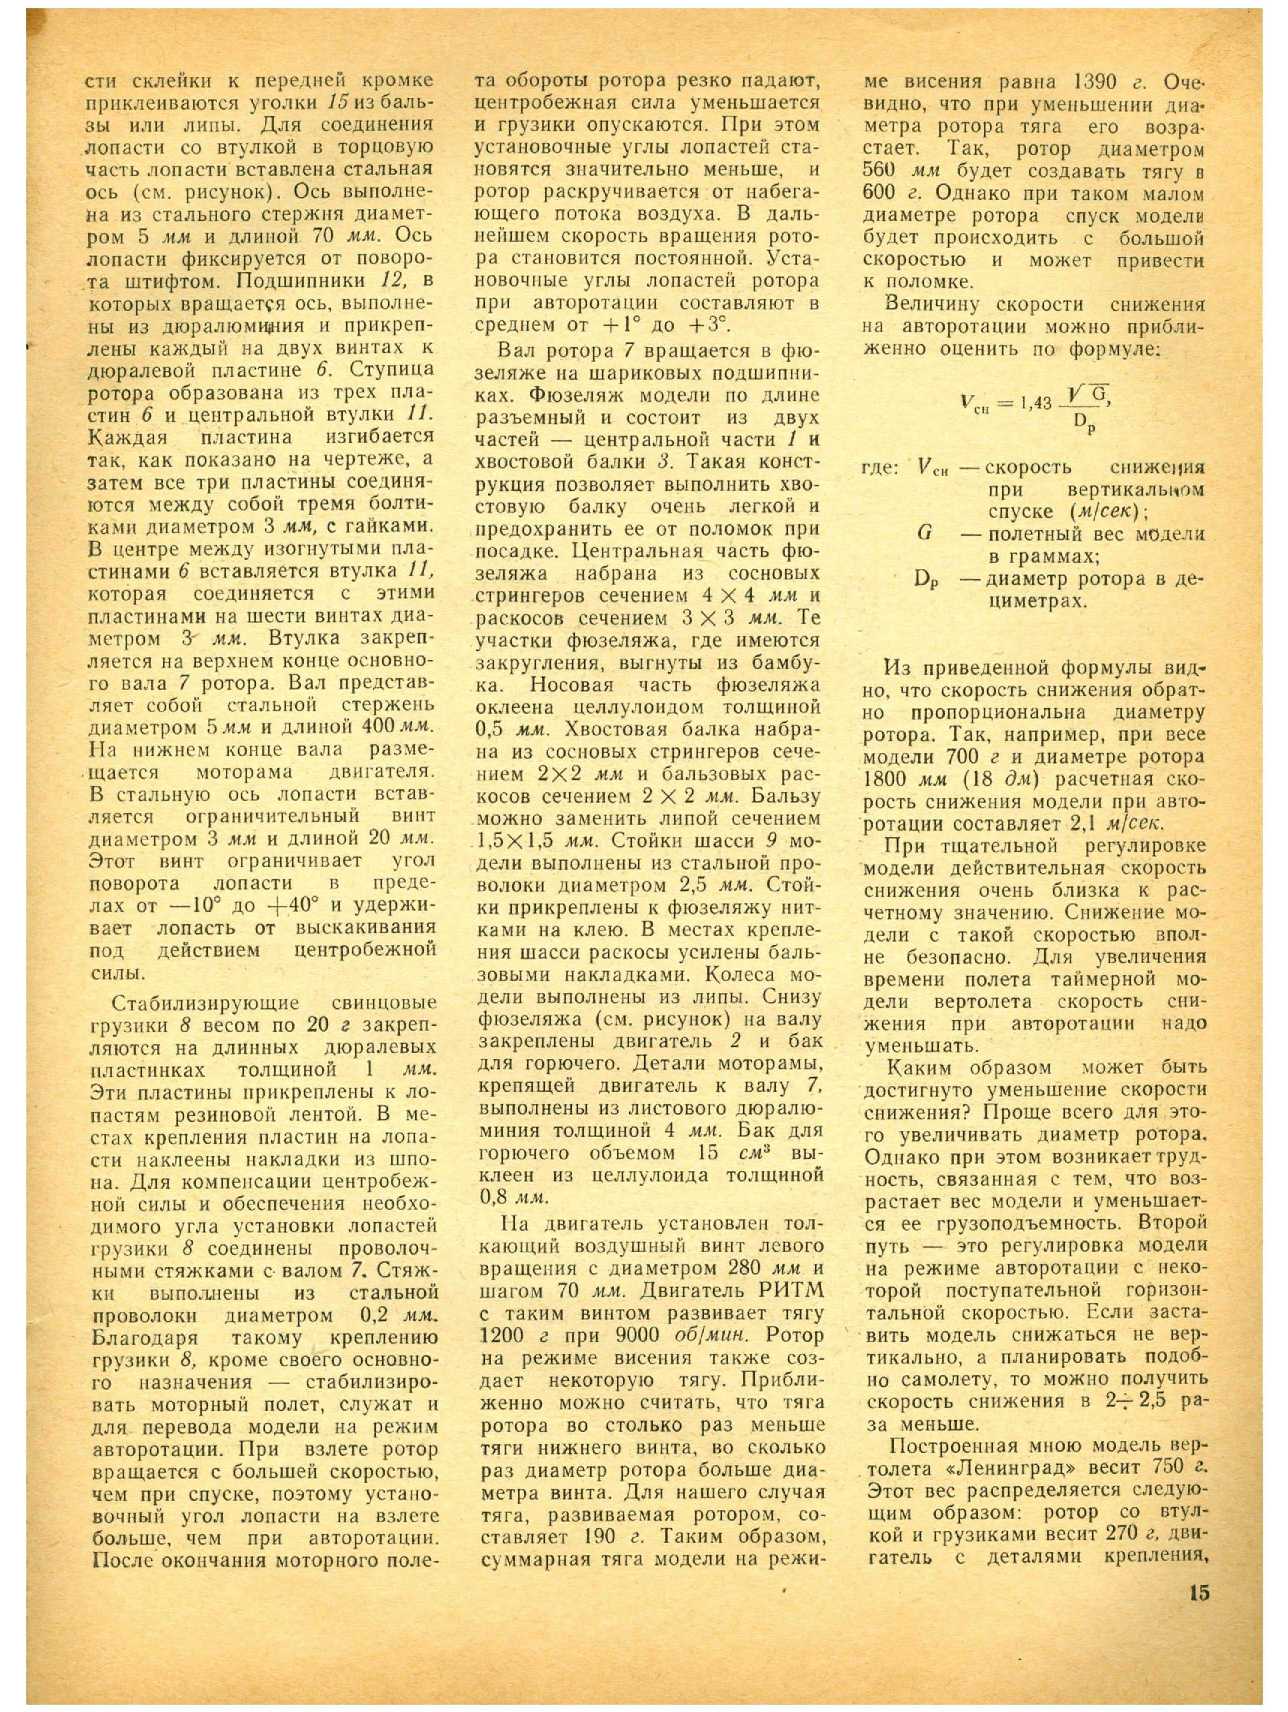 ЮМК 13, 1965, 15 c.